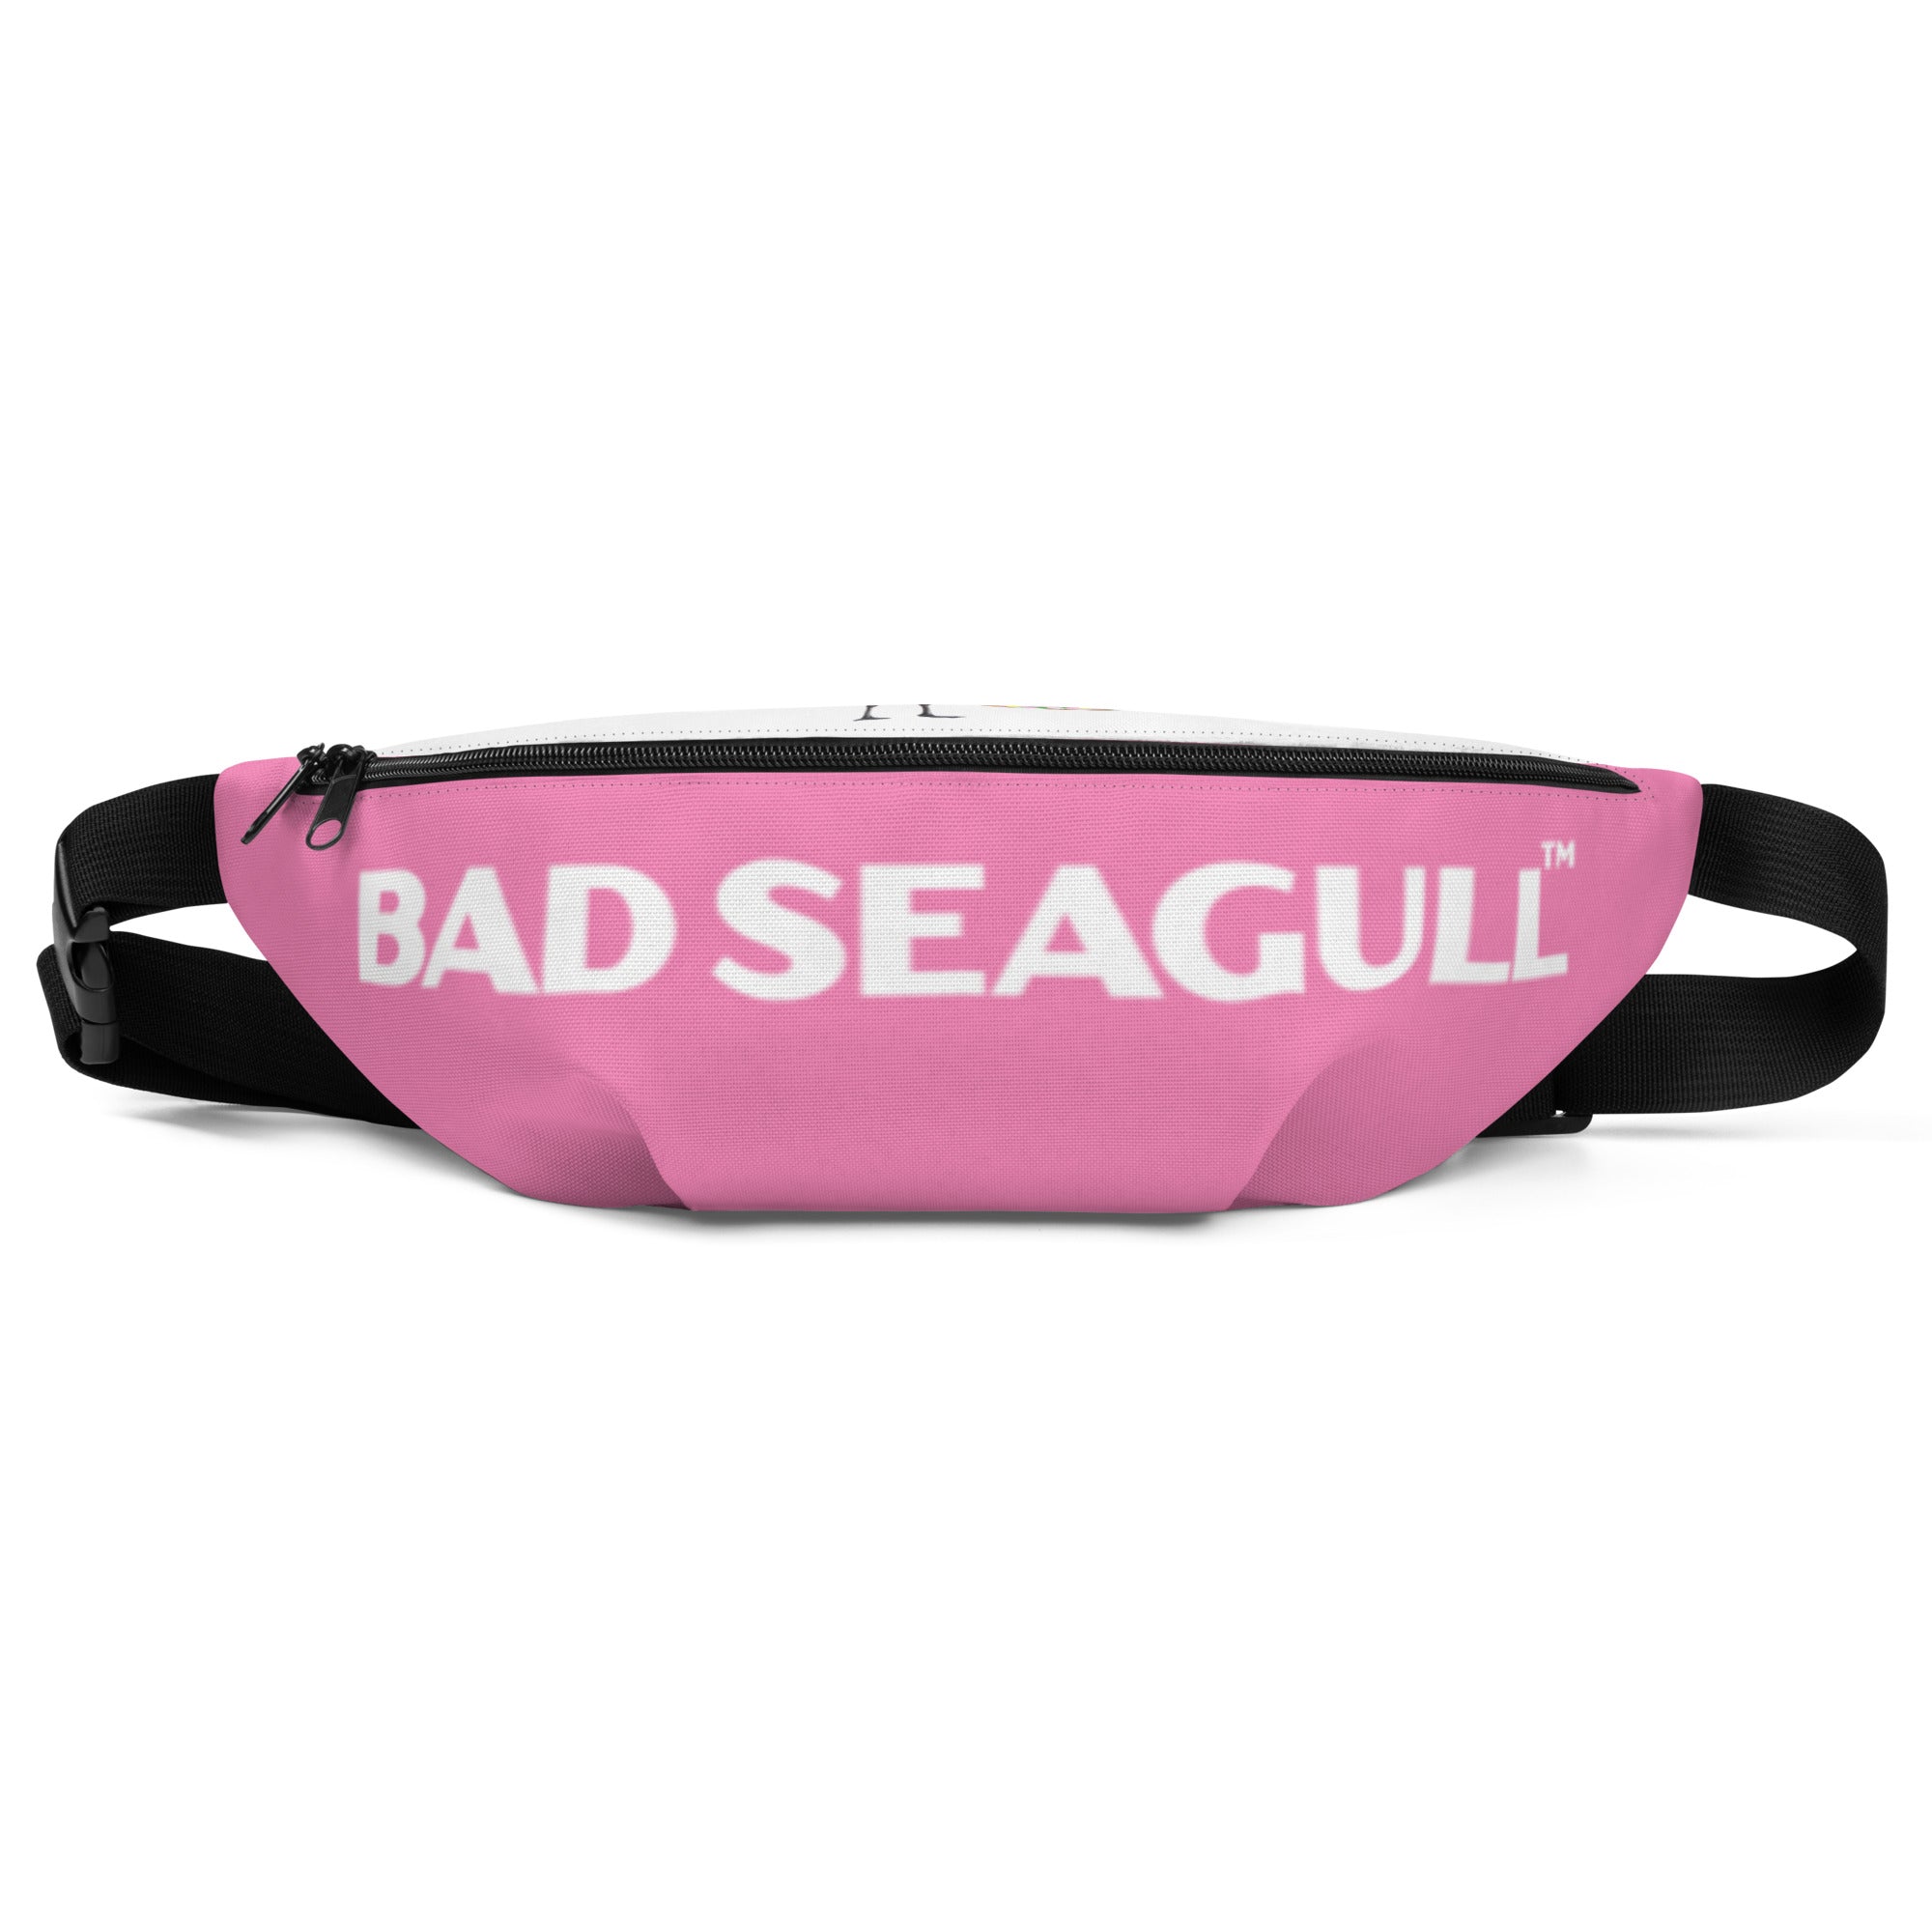 Good Stuff Bag - Bad Seagull with Doughnut